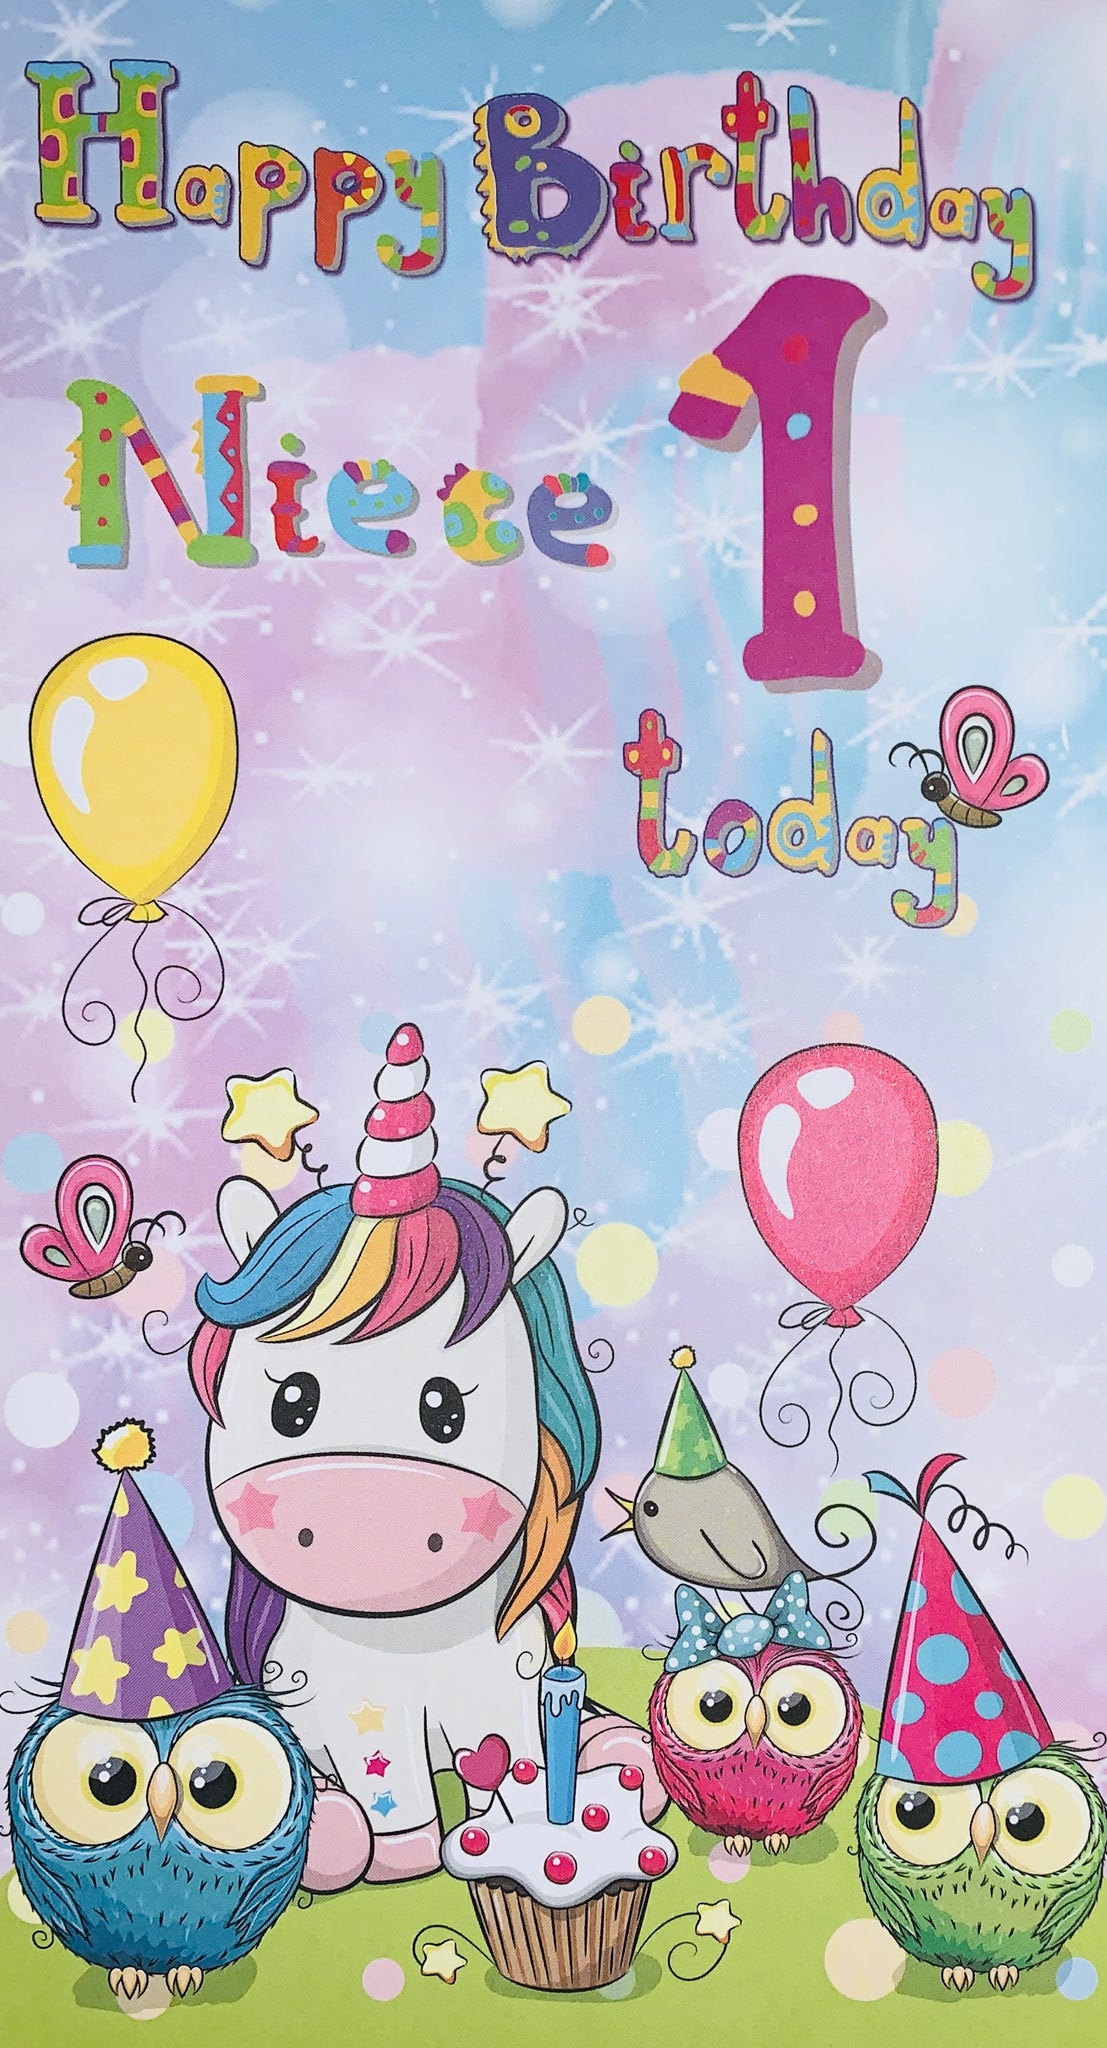 Niece 1st birthday card - unicorn